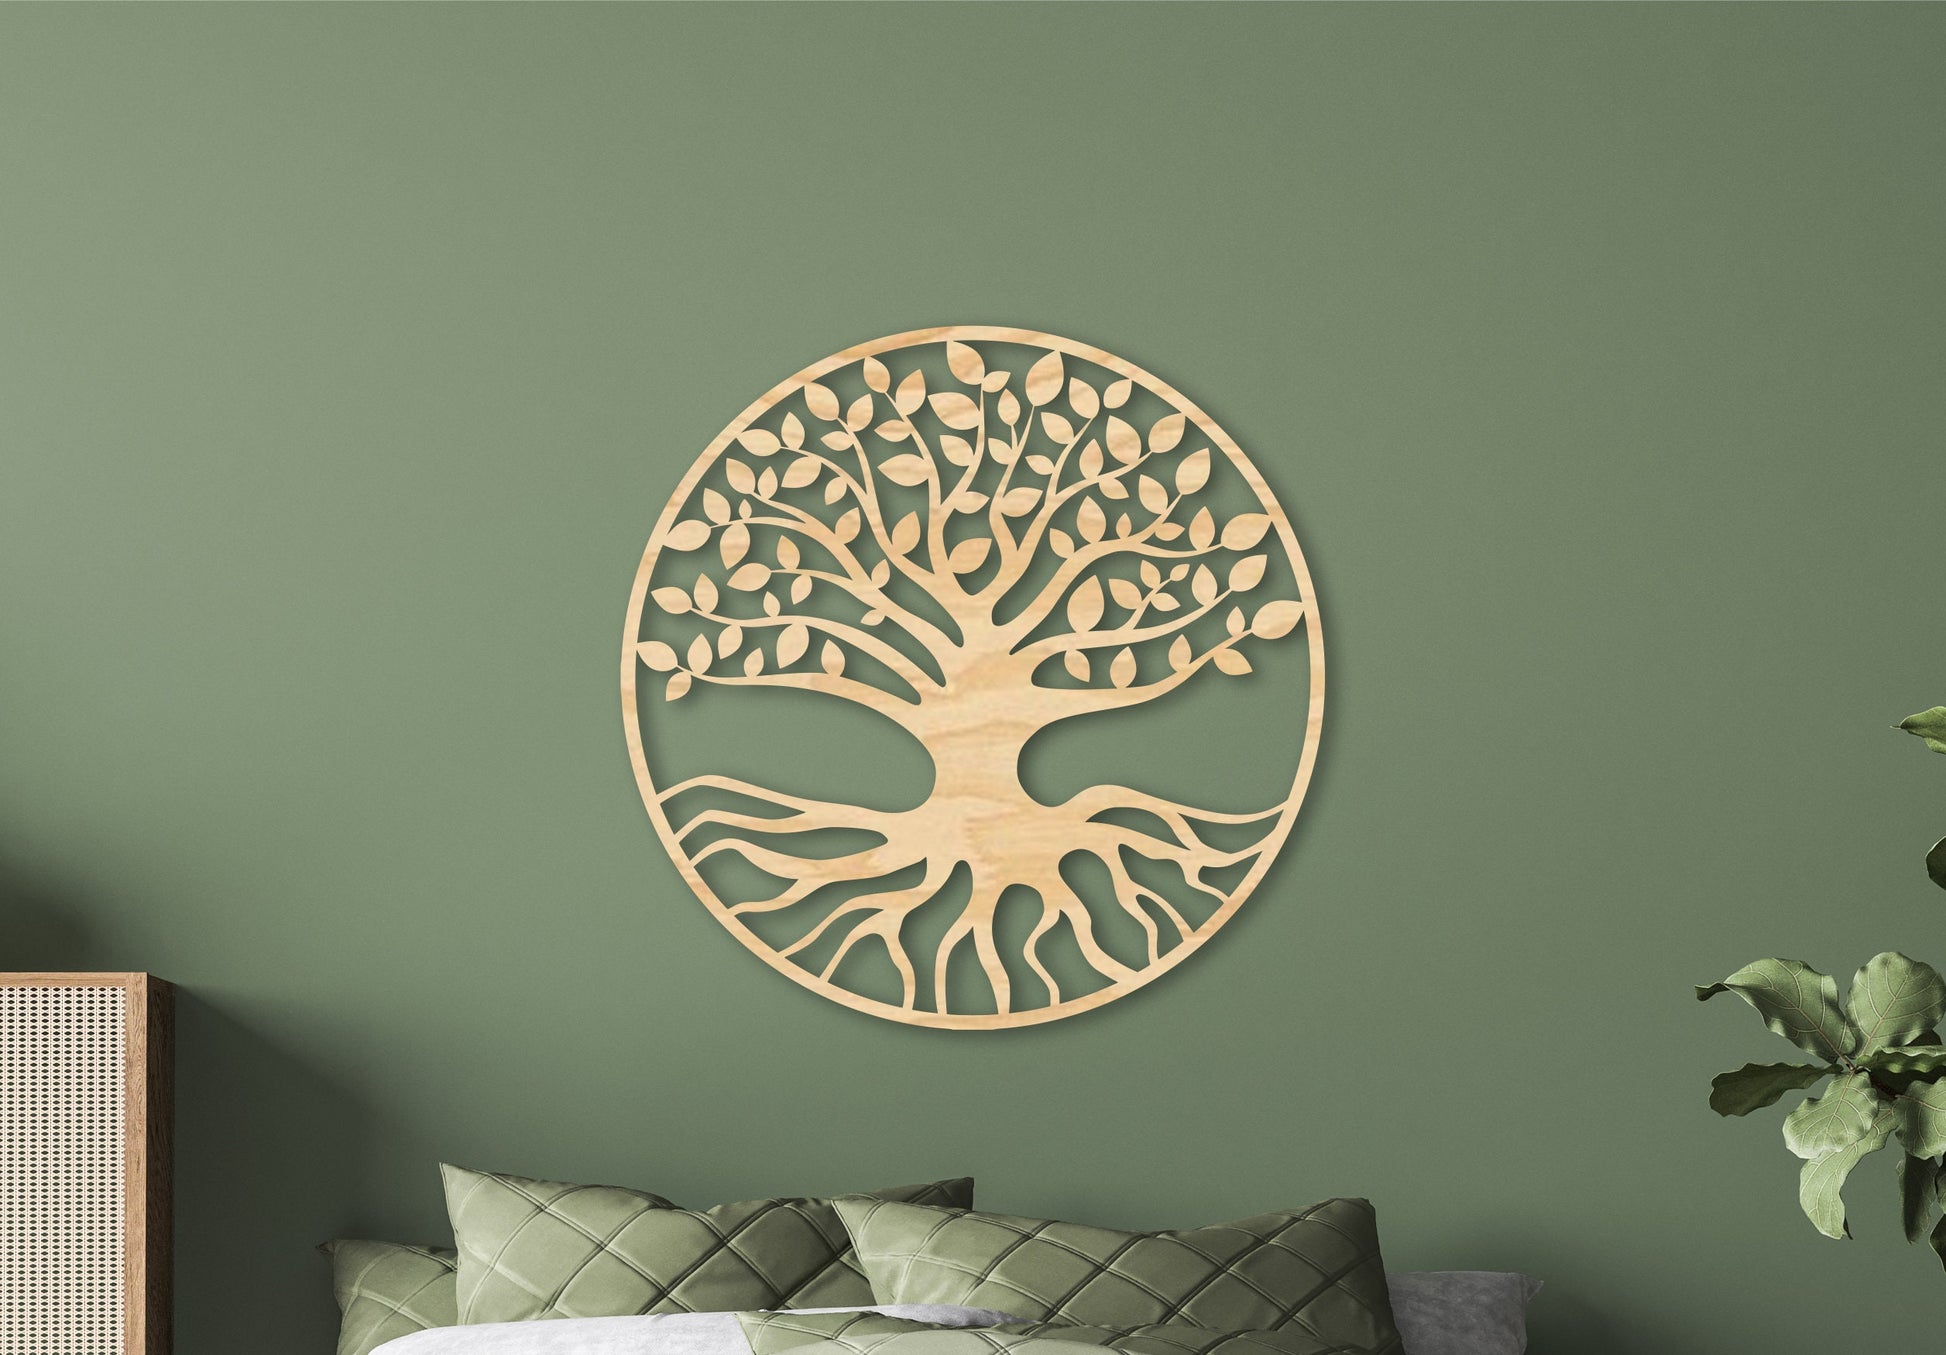 Tree of life wall art,Wooden wall decor,Norse mythology,Yggrasil,Celtic wall art